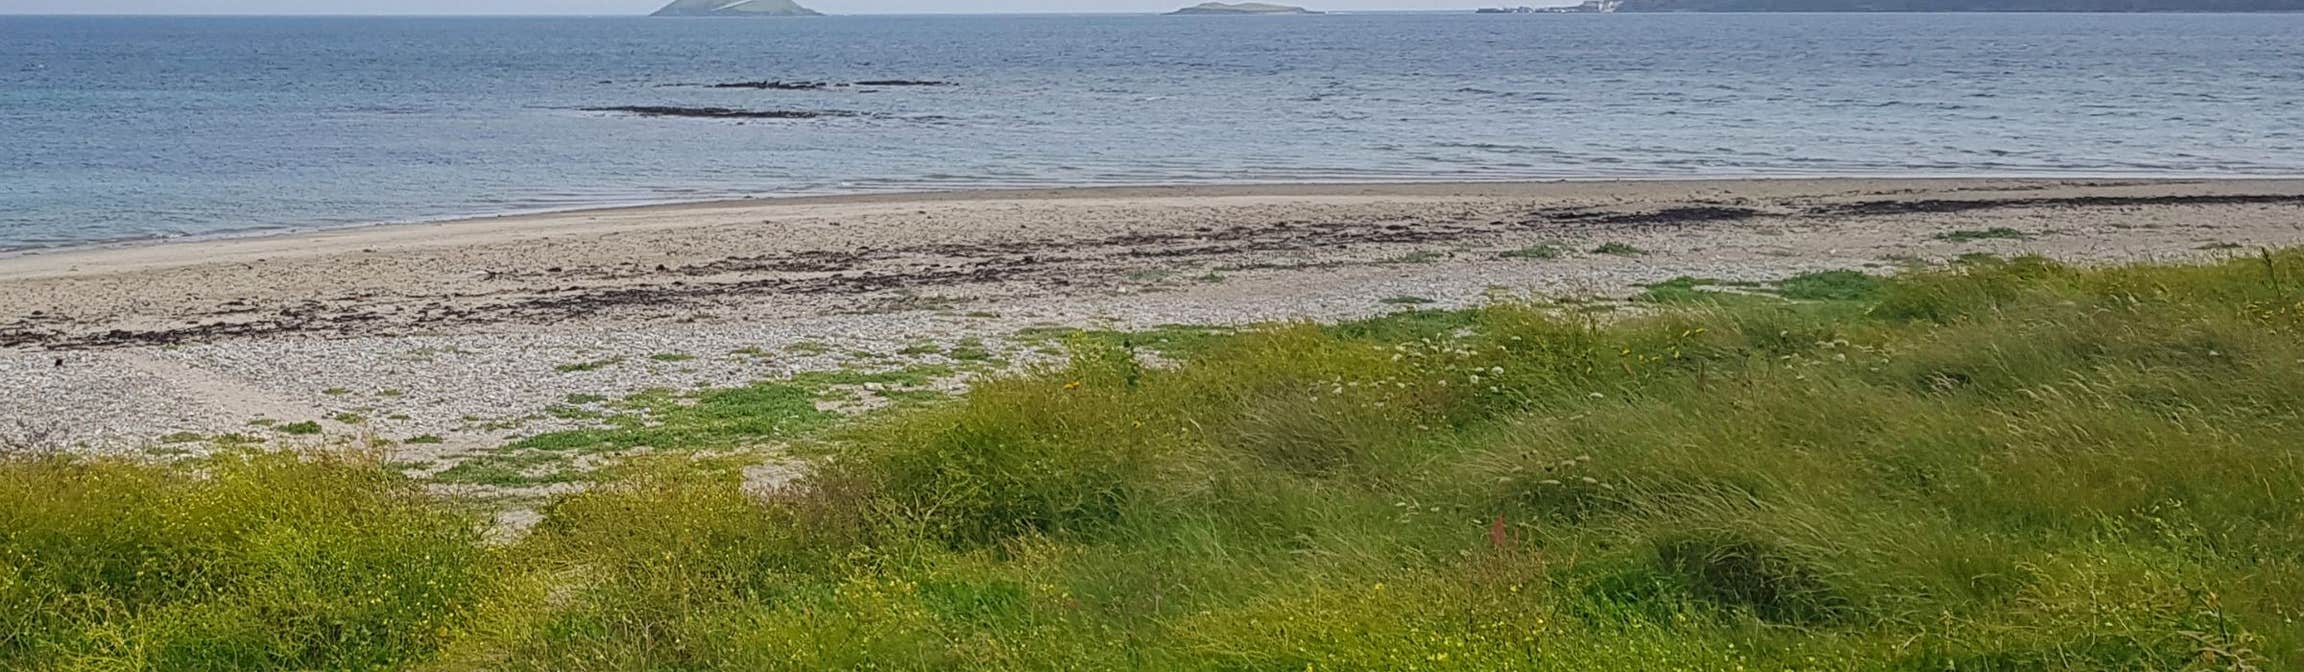 Image of Shanagarry beach in County Cork